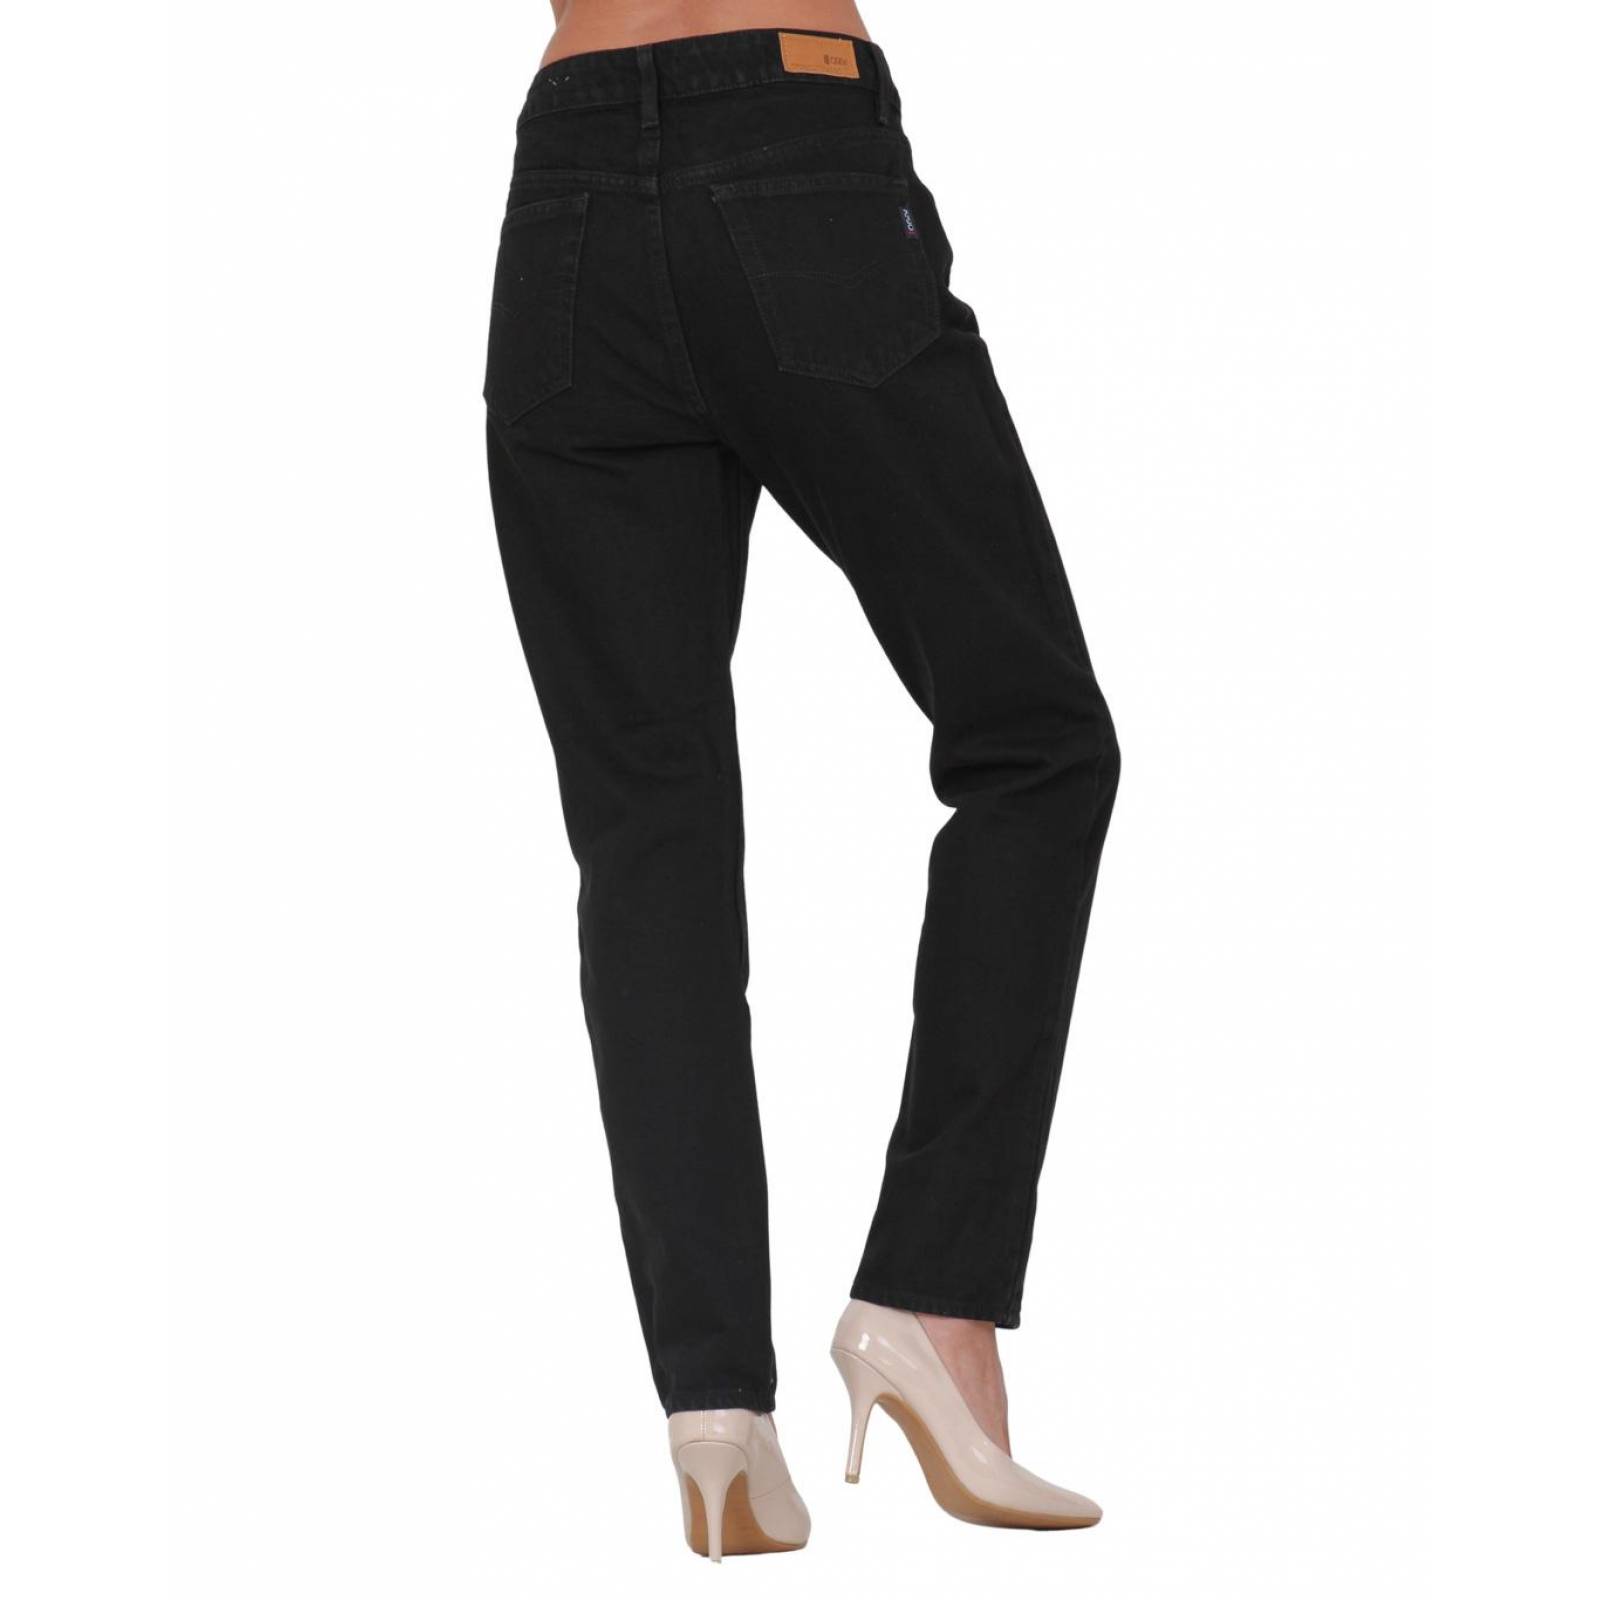 Jeans Moda Mujer Oggi Black 59103616 Mezclilla 